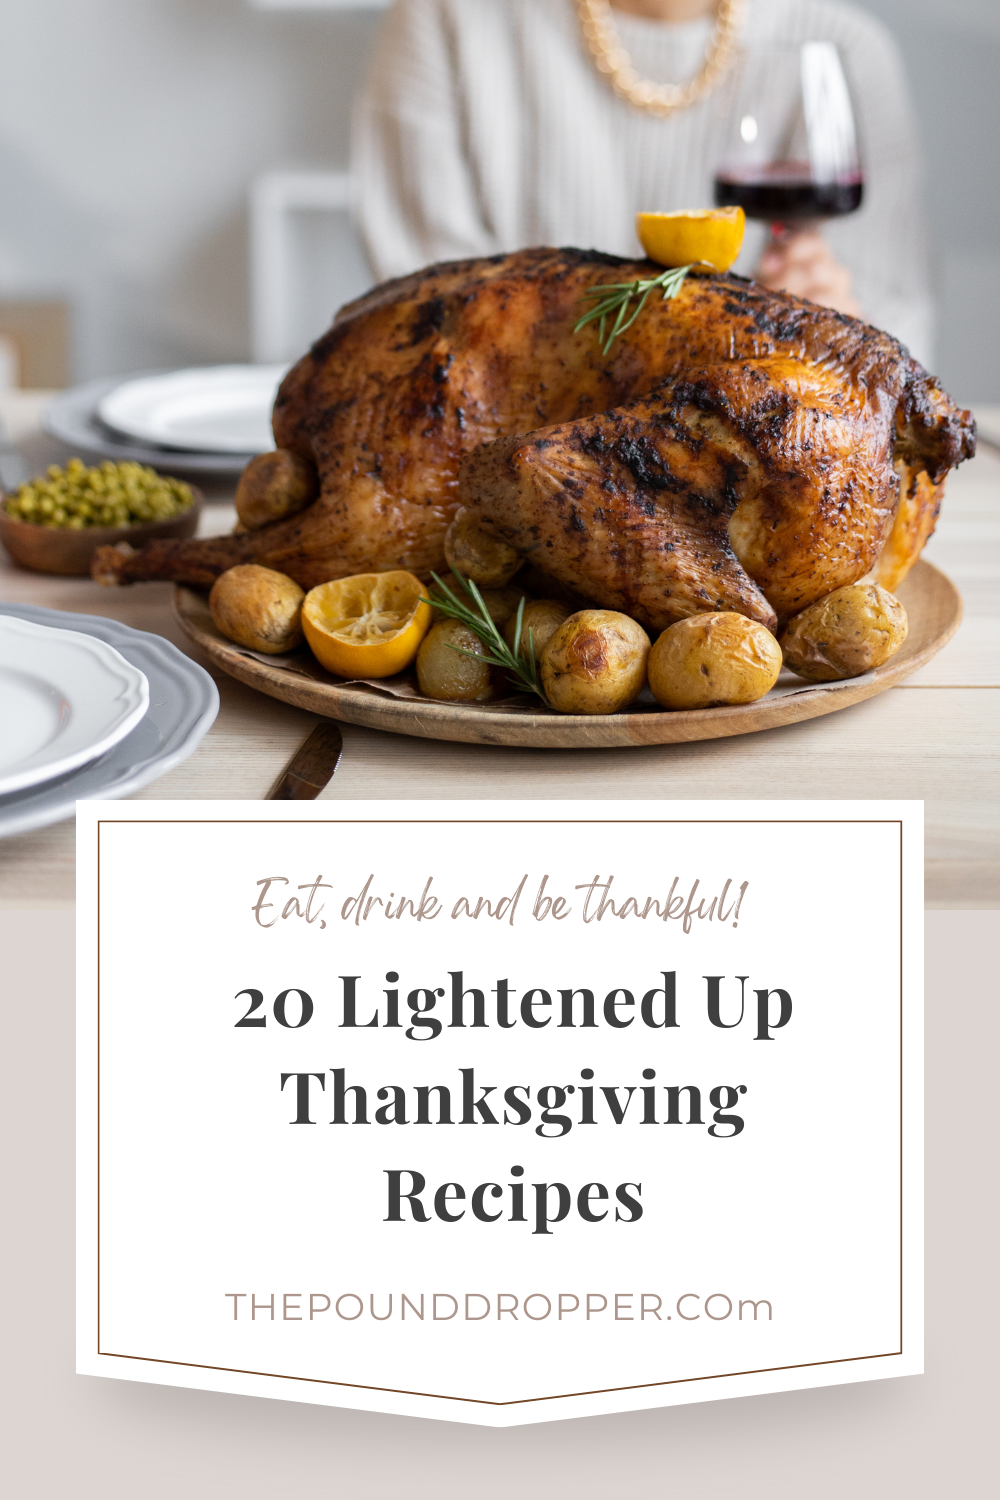 20 Lightened Up Thanksgiving Recipes via @pounddropper